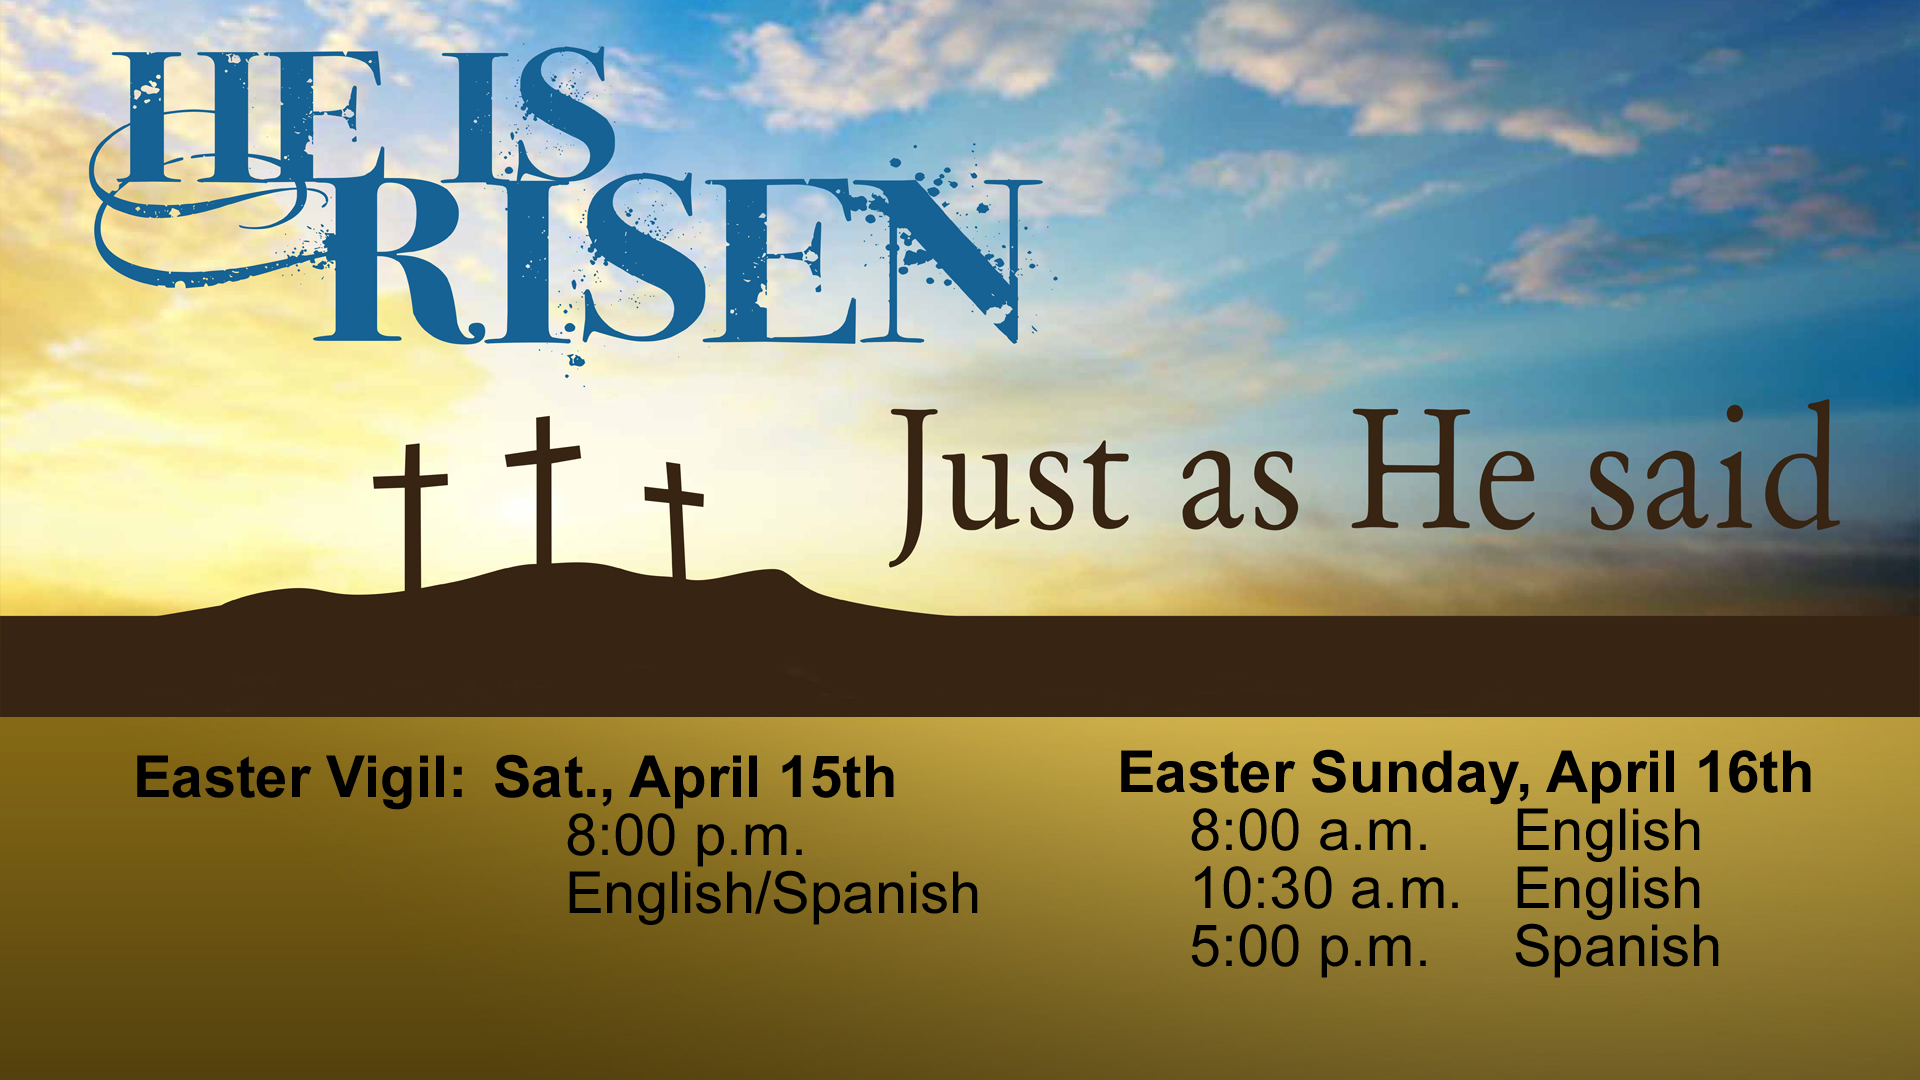 Easter Sunday Mass Schedule – Catholic Church of the Nativity